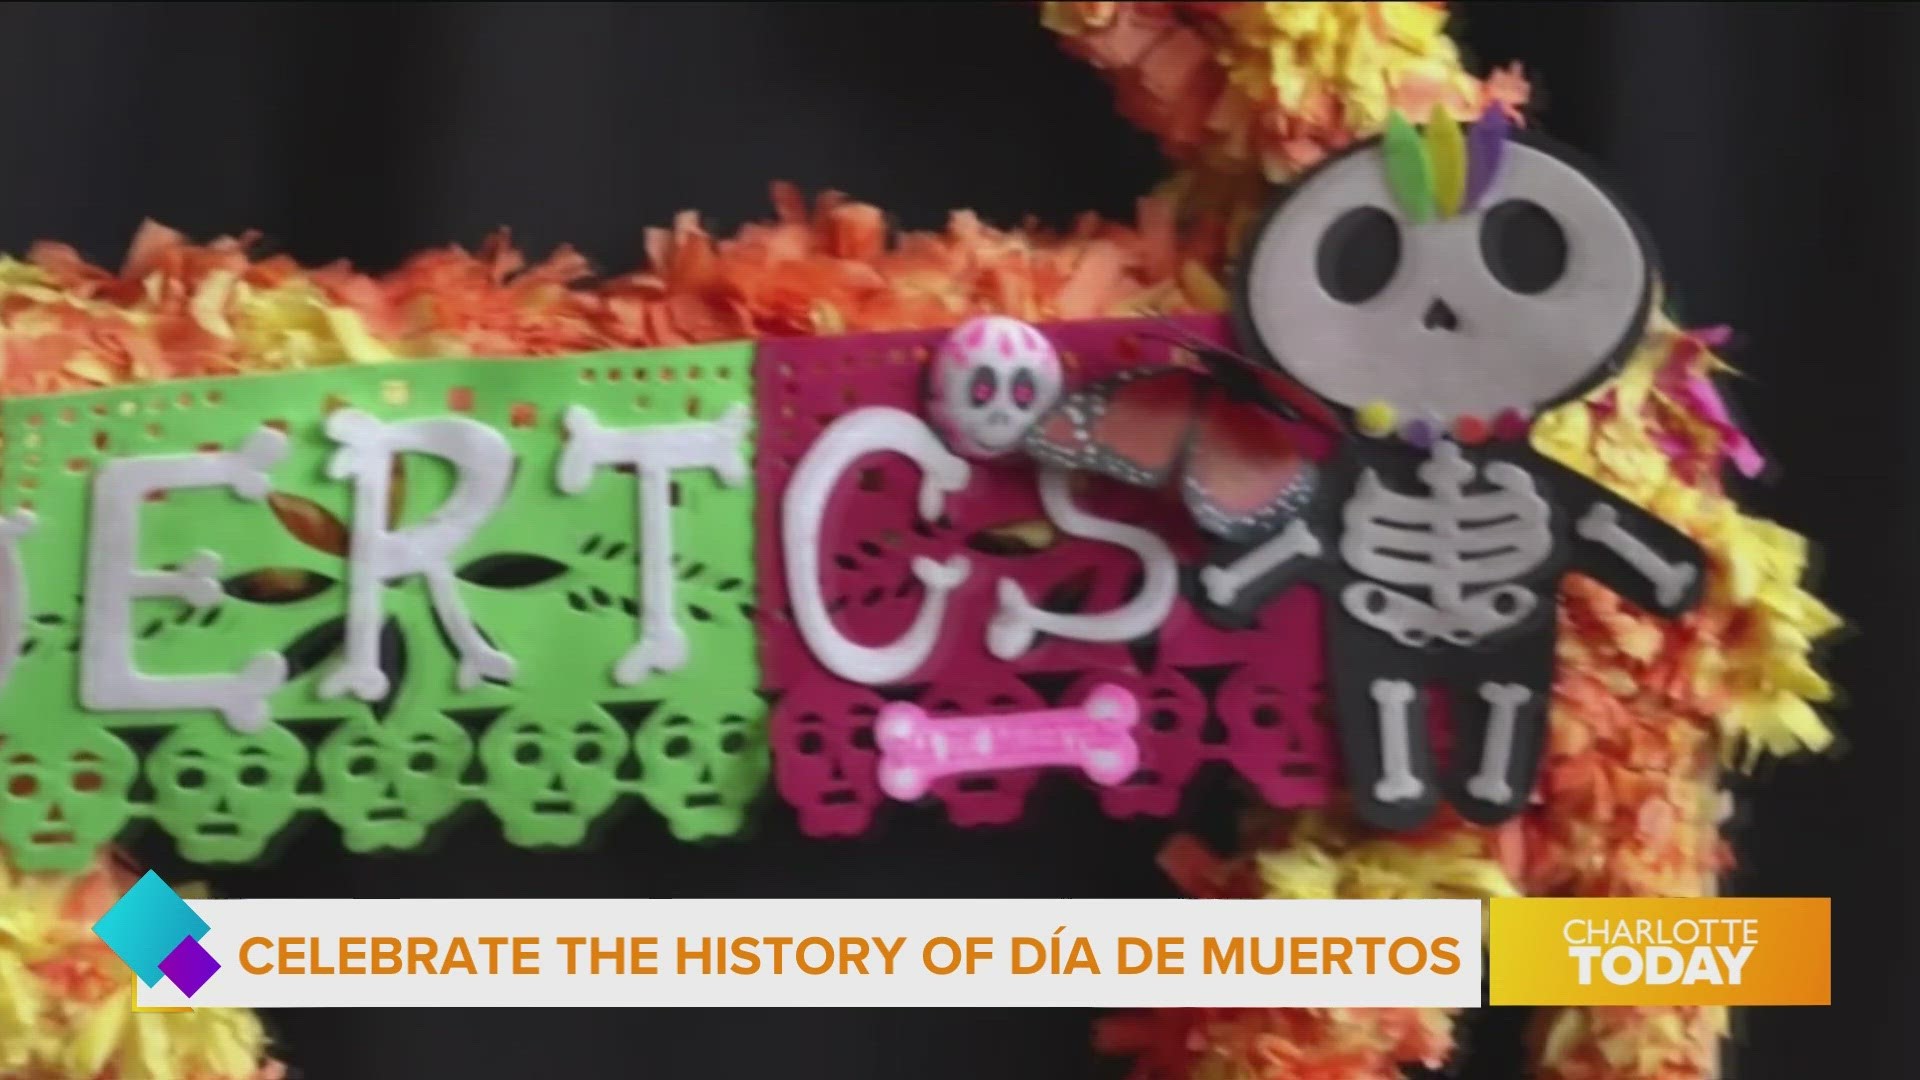 A celebration of life - don’t miss Dia' de Muertos